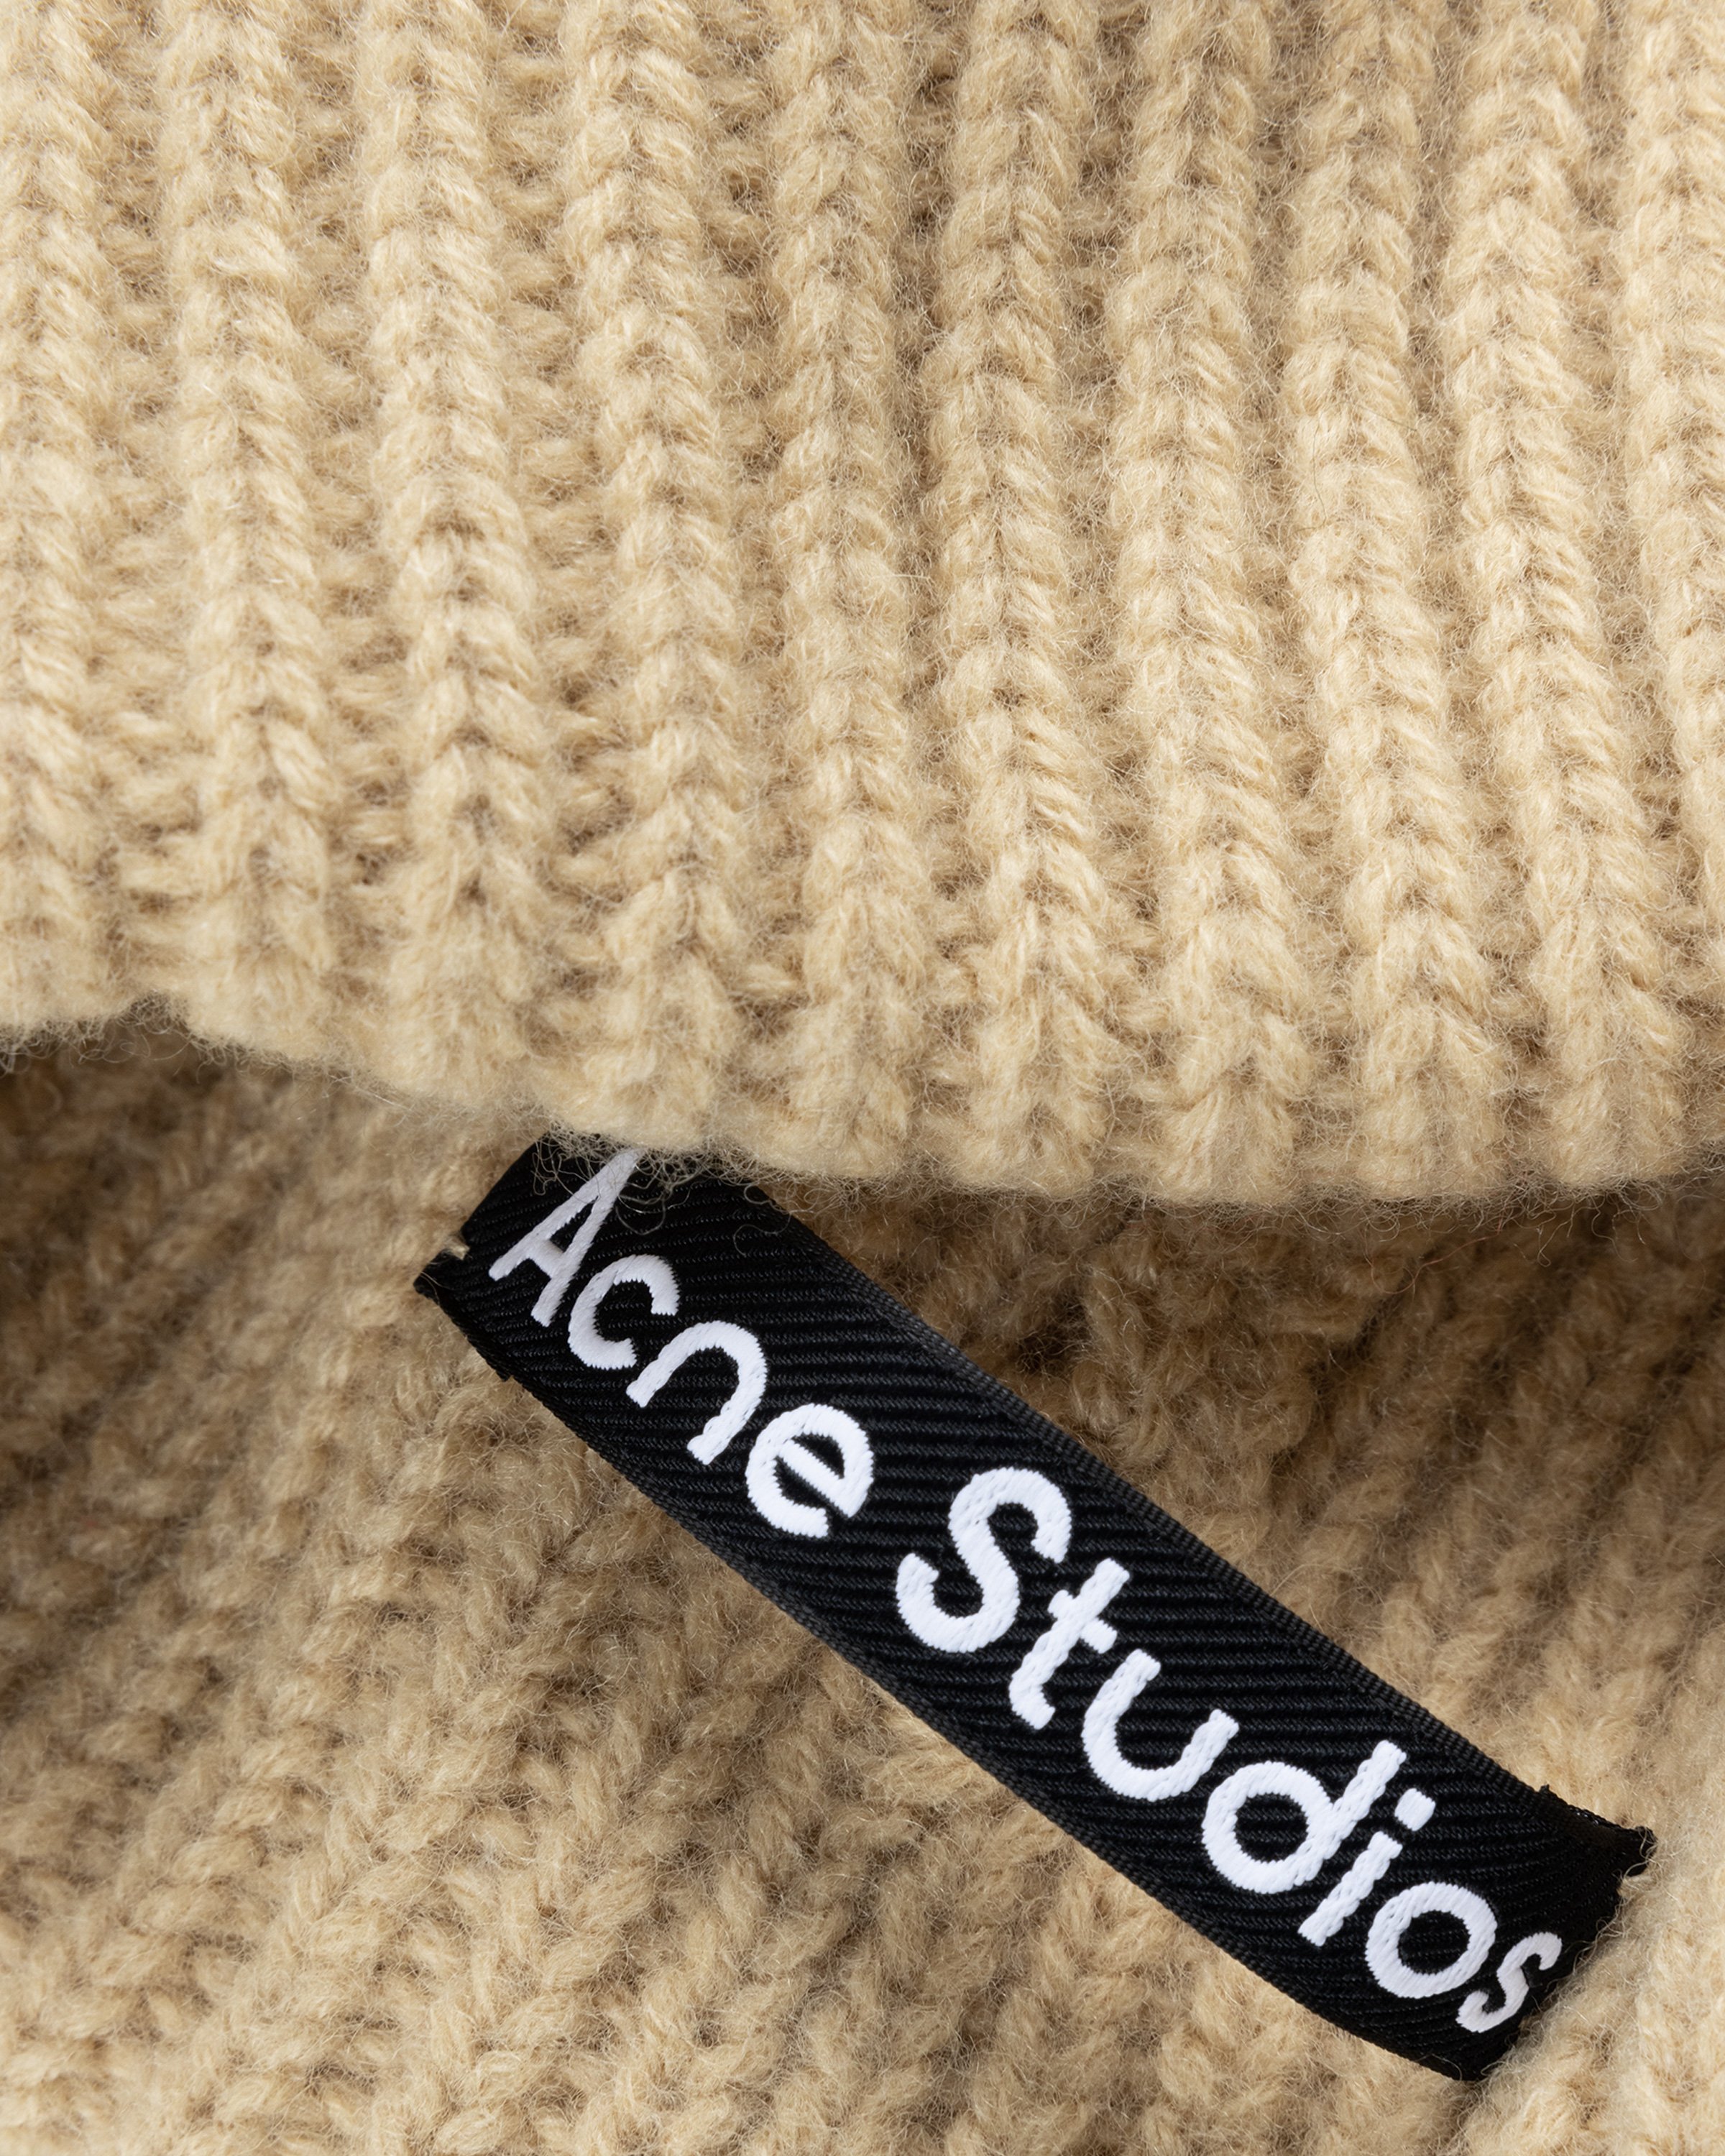 Acne Studios - Large Face Logo Beanie Biscuit Beige - Accessories - BEIGE - Image 5